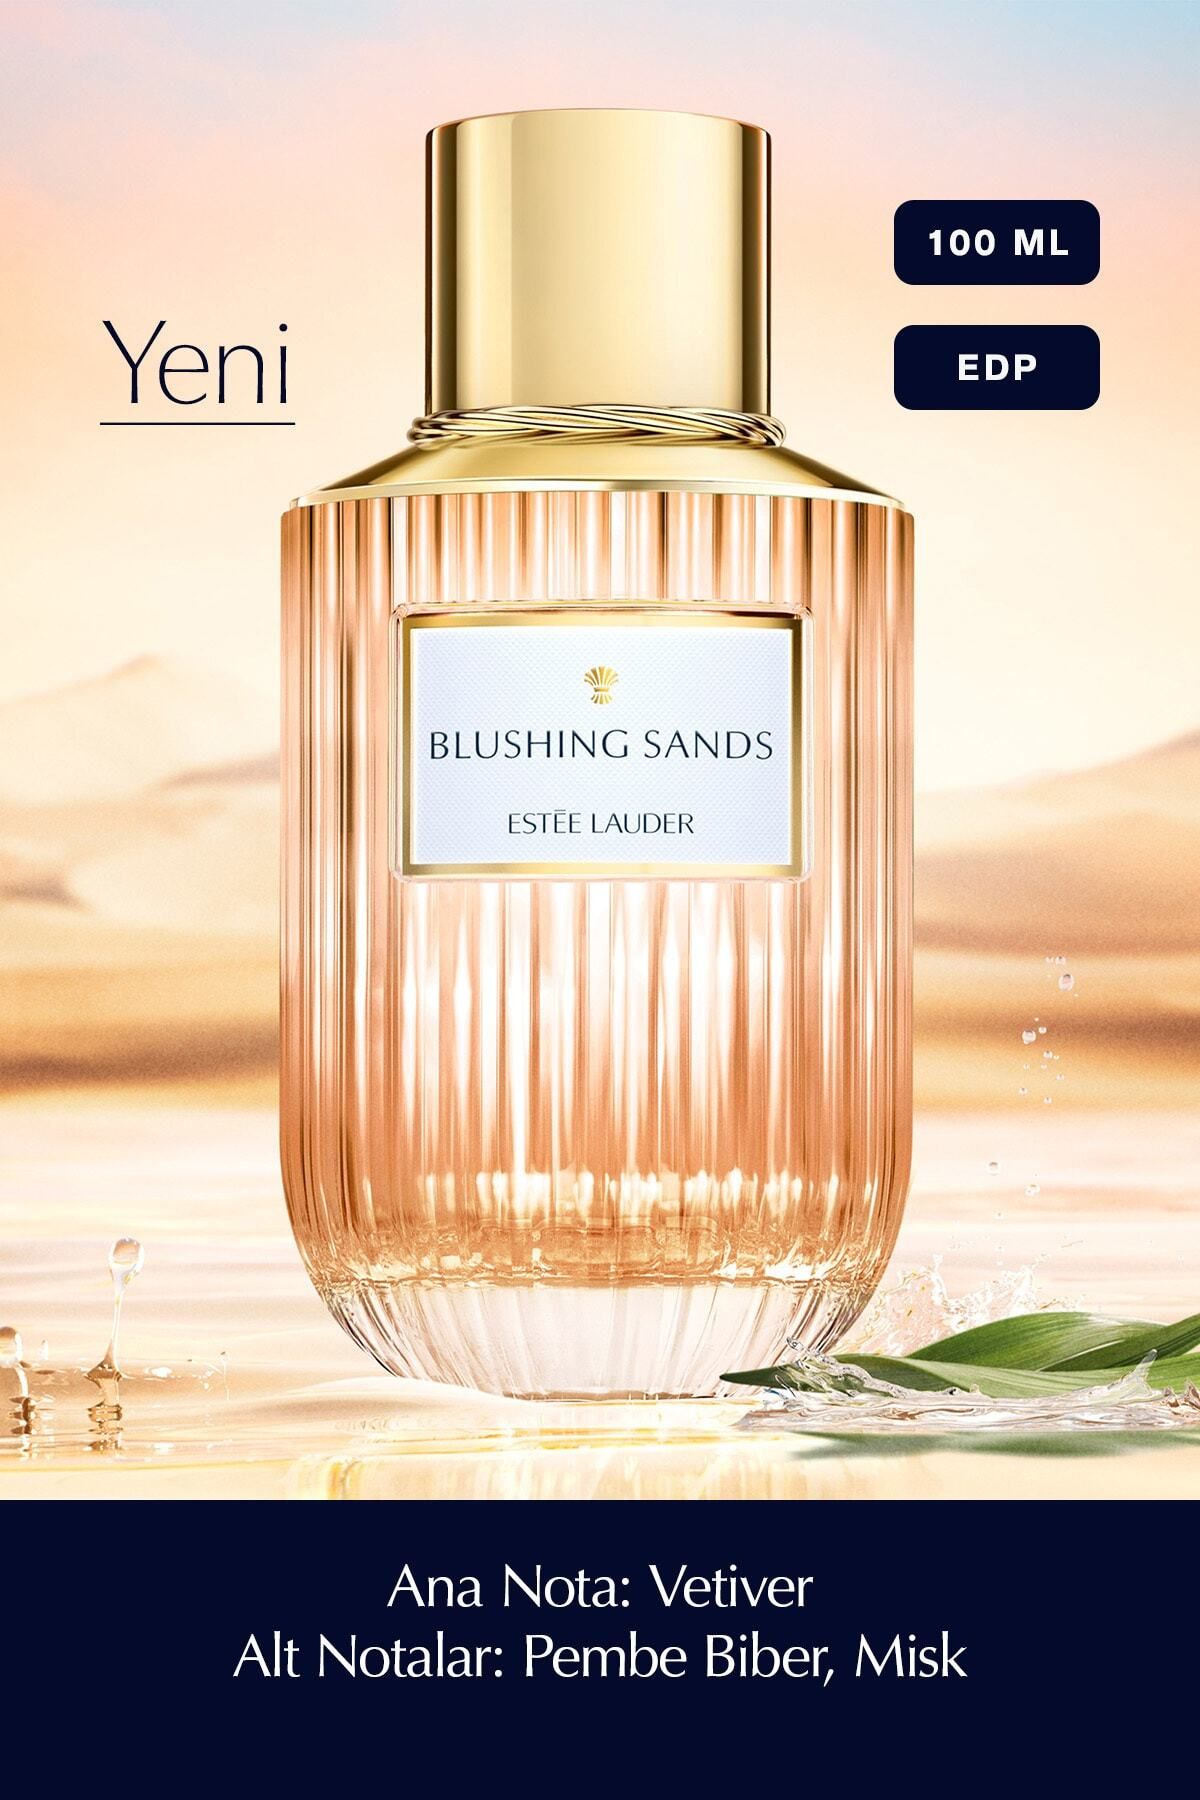 Estee Lauder Blushing Sands - ادوپرفیوم 100 ml عطر زنانه مجموعه عطرهای لوکس